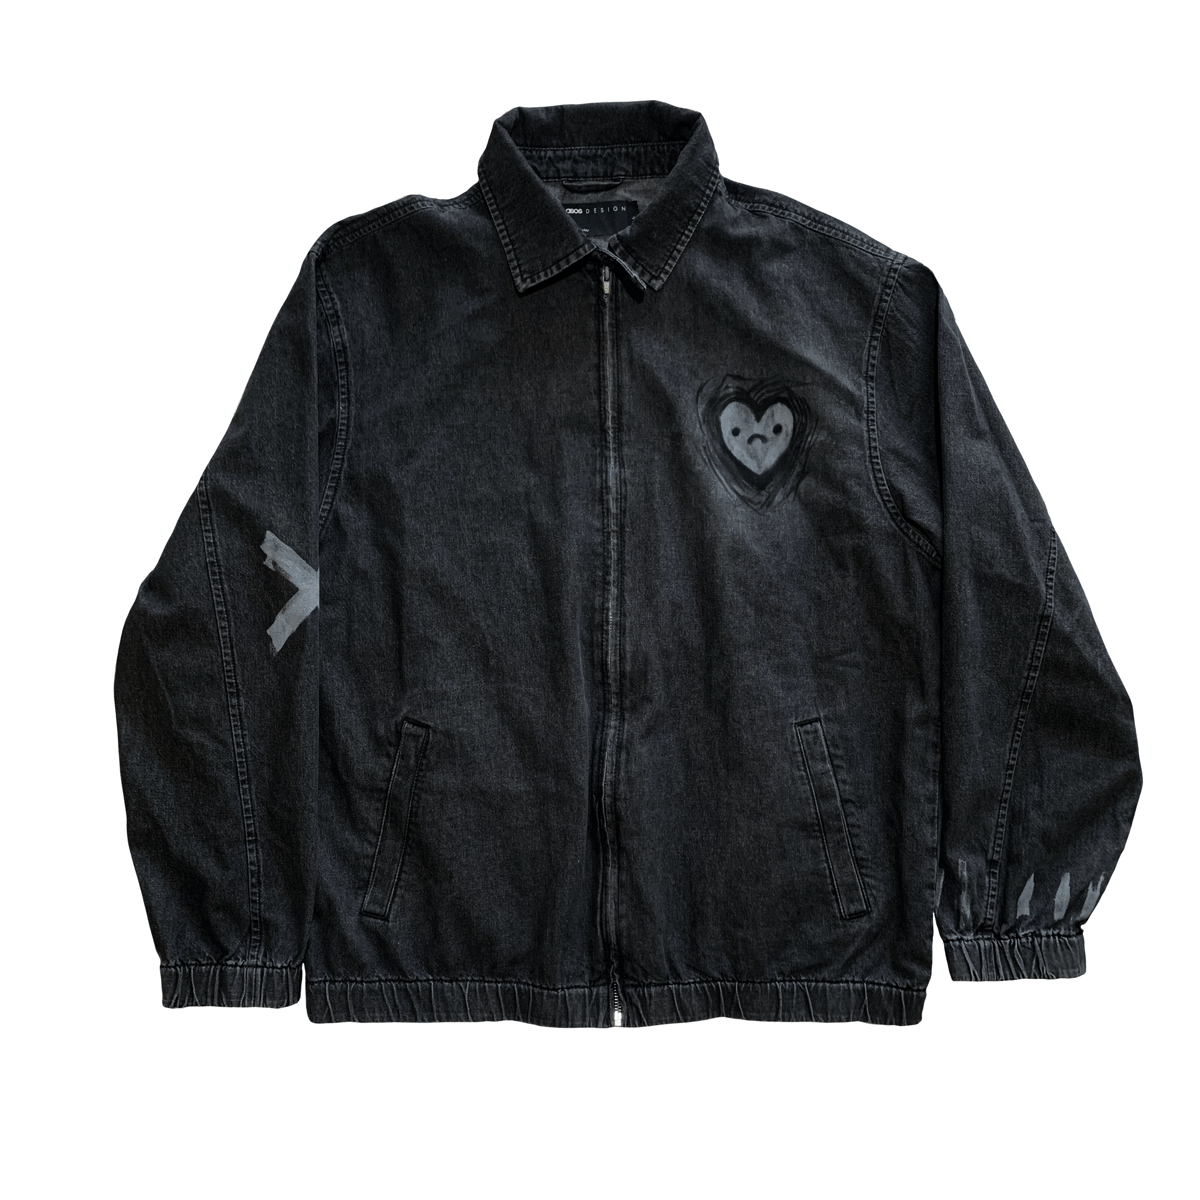 Skvll Black Harrington Jacket